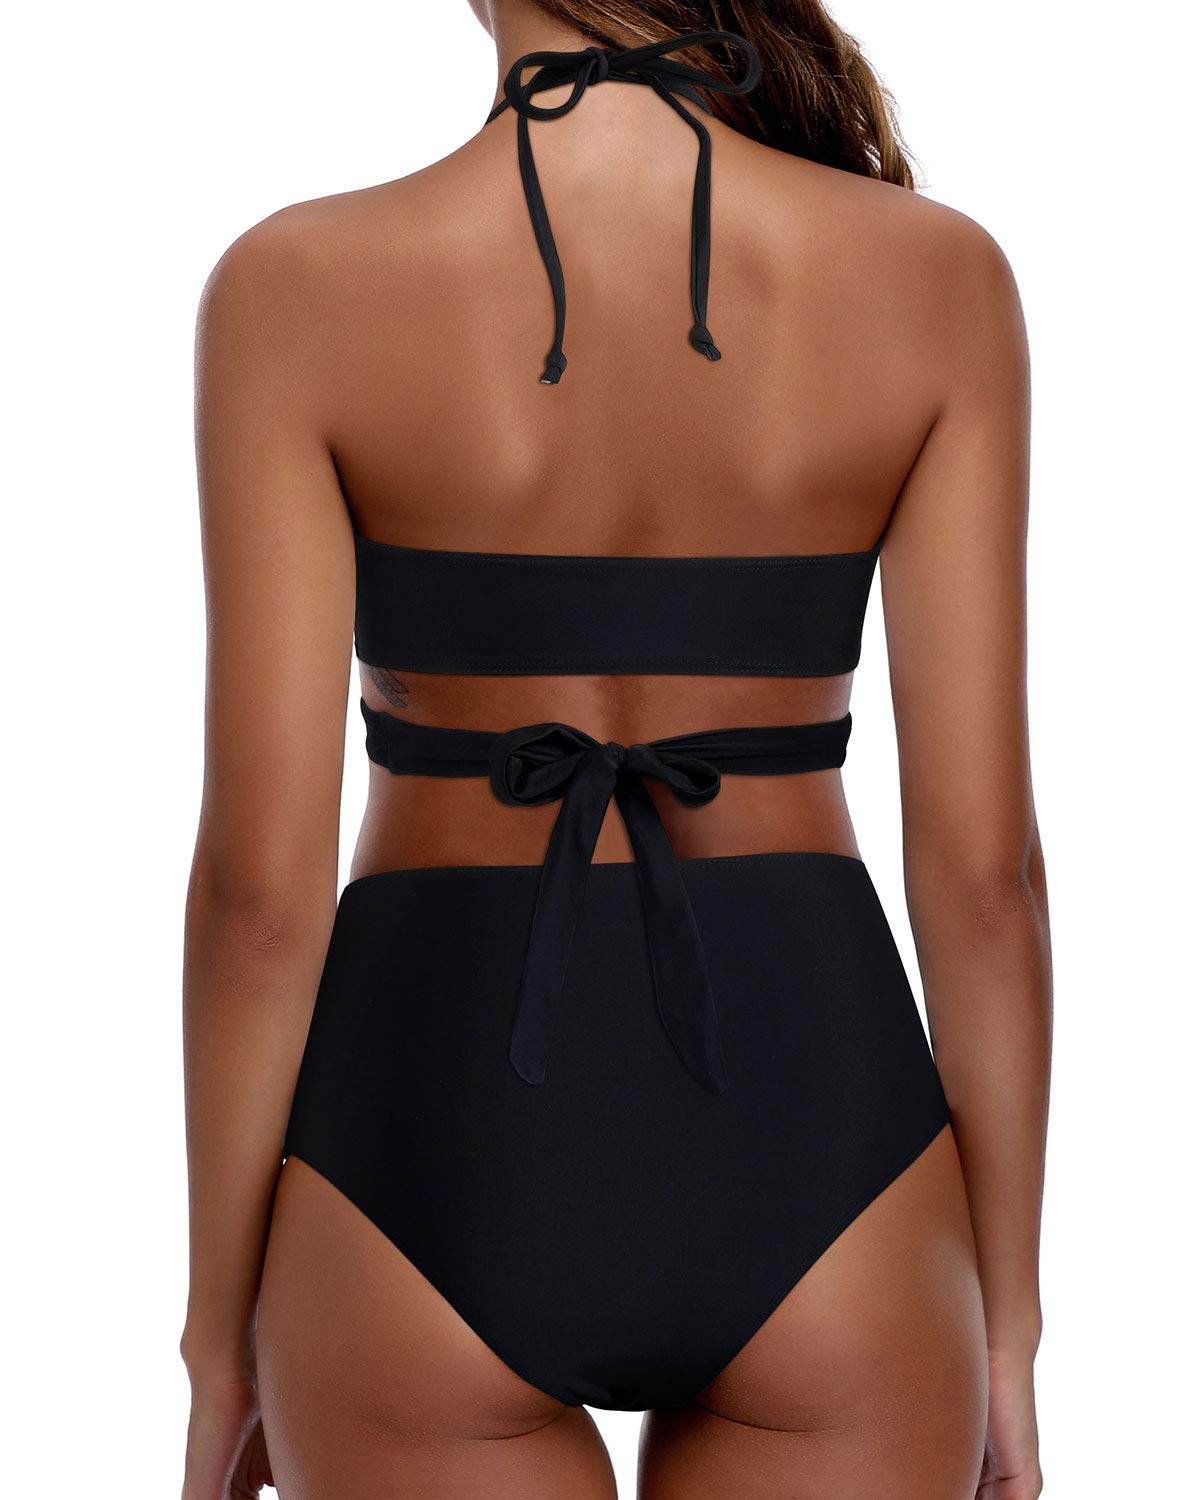 Women Cross Wrap Halter Bikini Set High Waisted Bathing Suits Push Up Two Piece Swimsuits - image 4 of 8